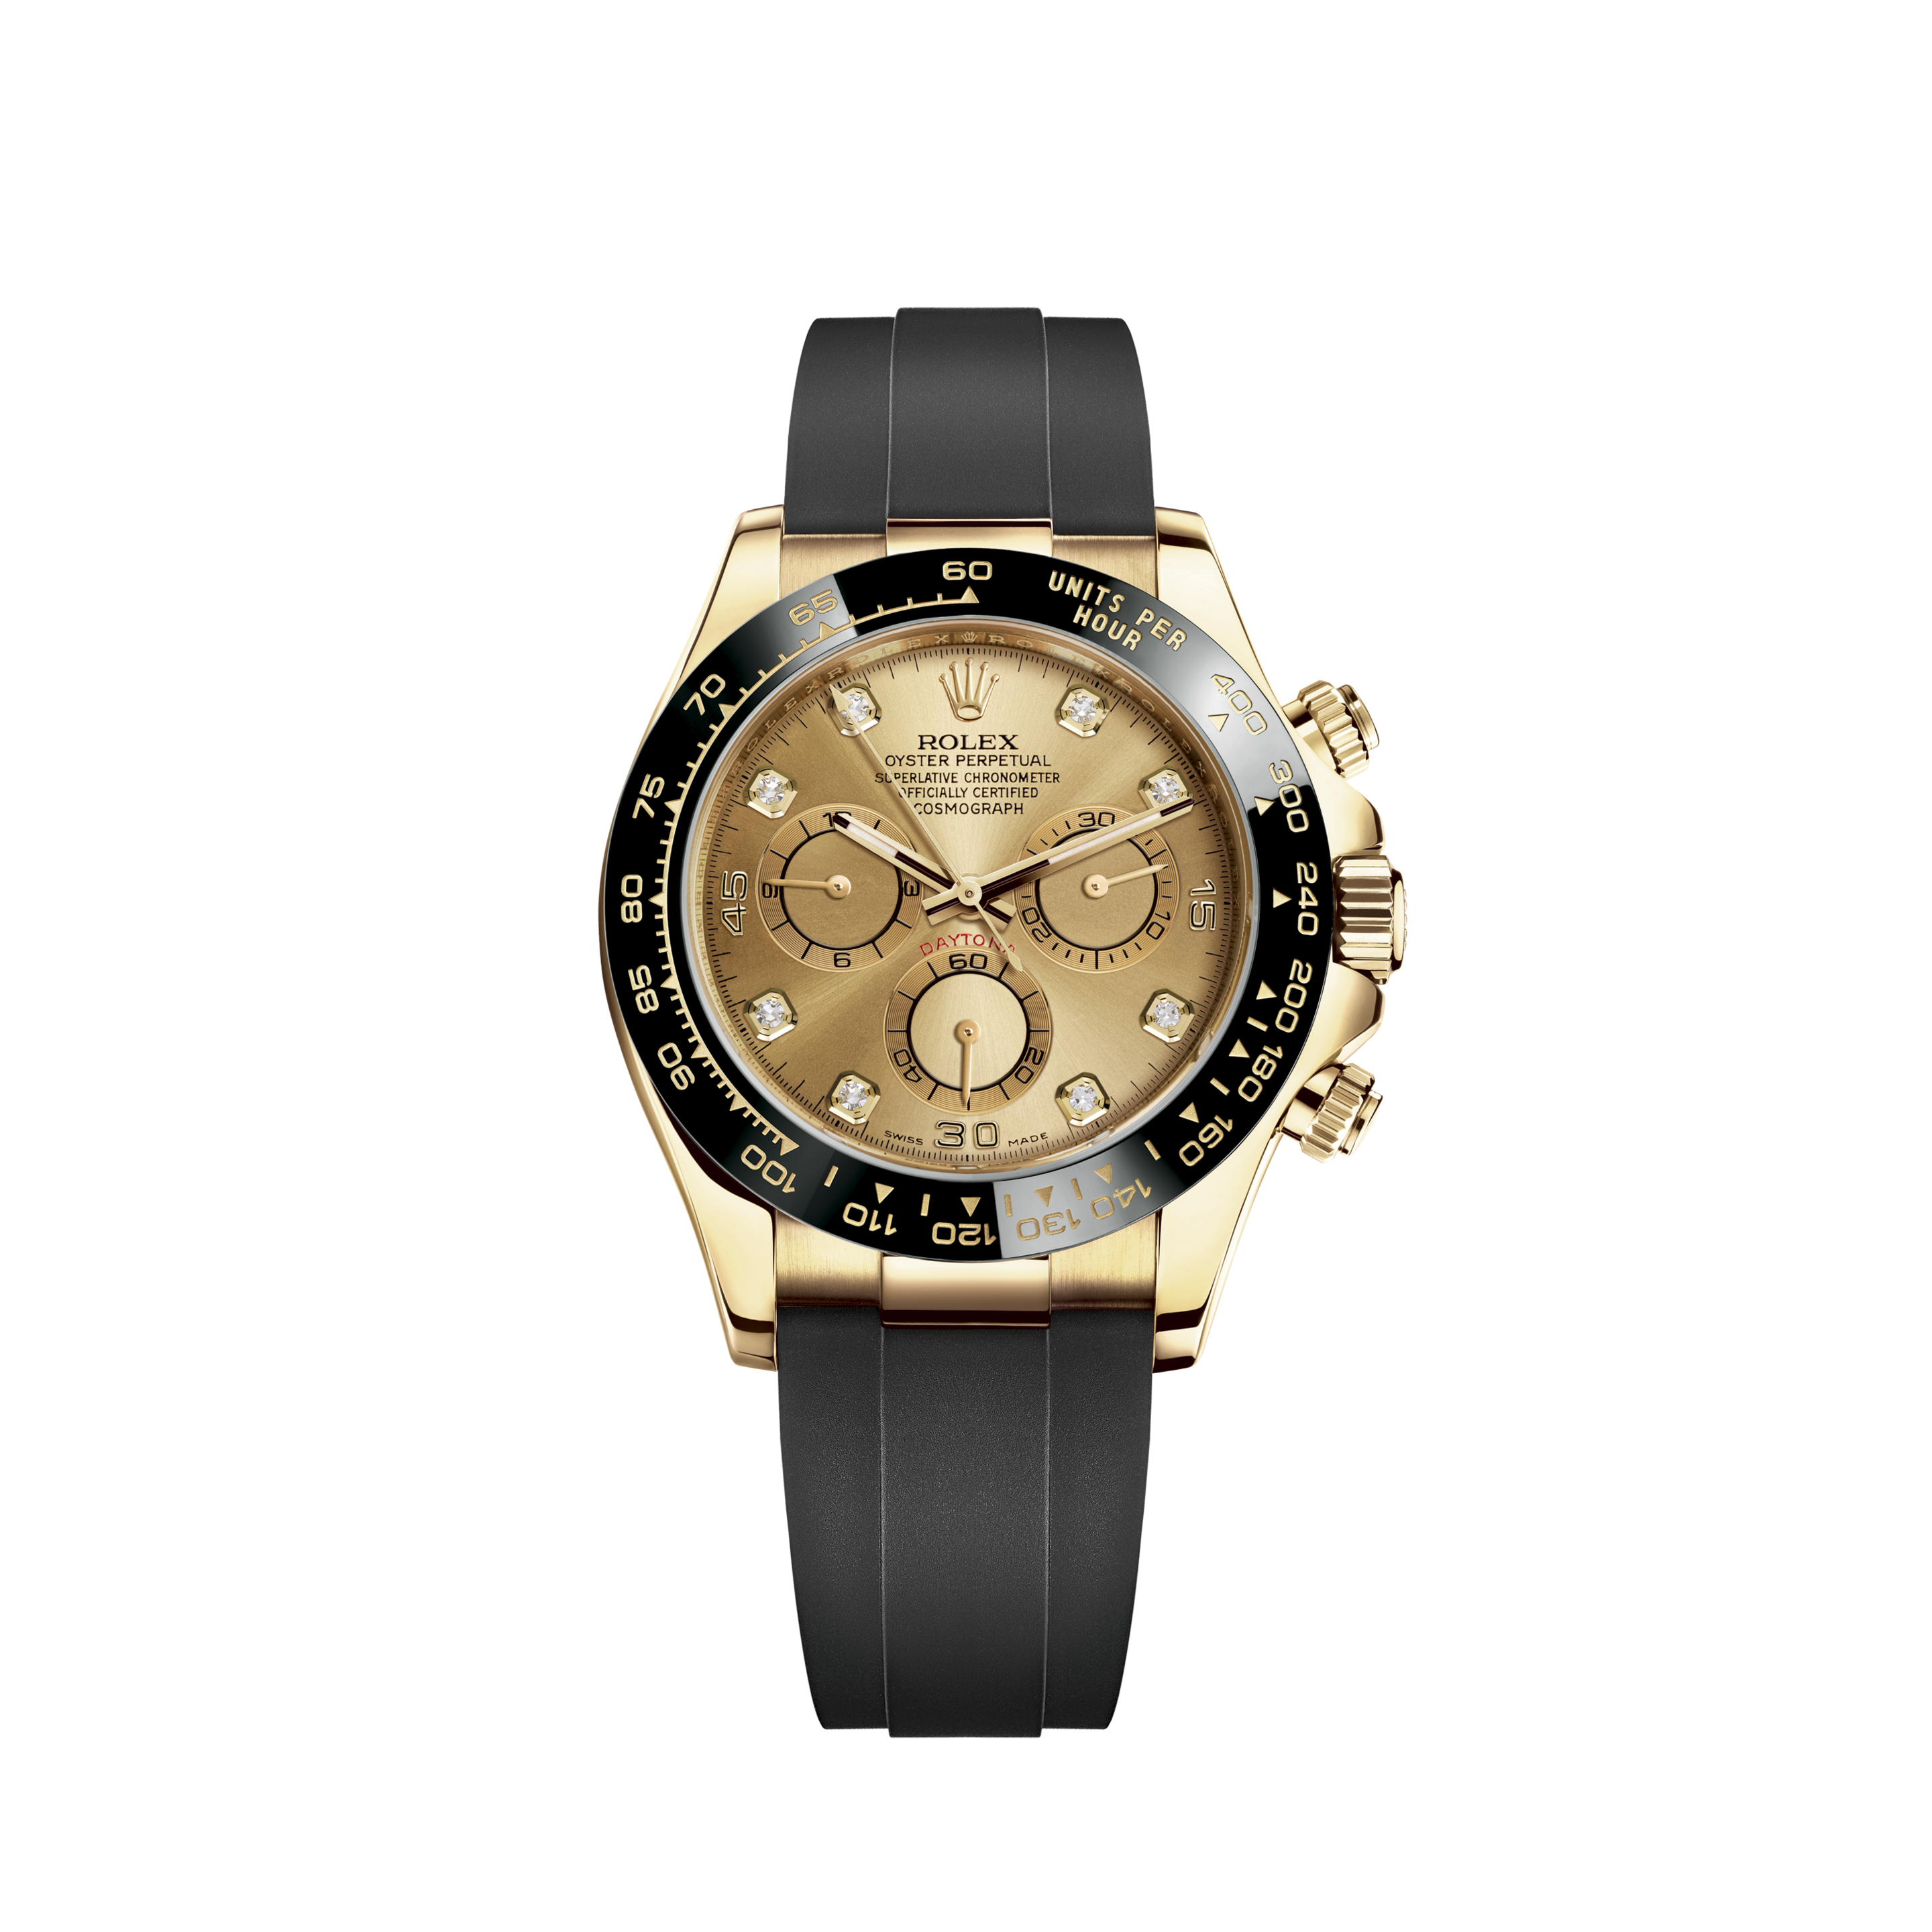 rolex diamond daytona golden watch